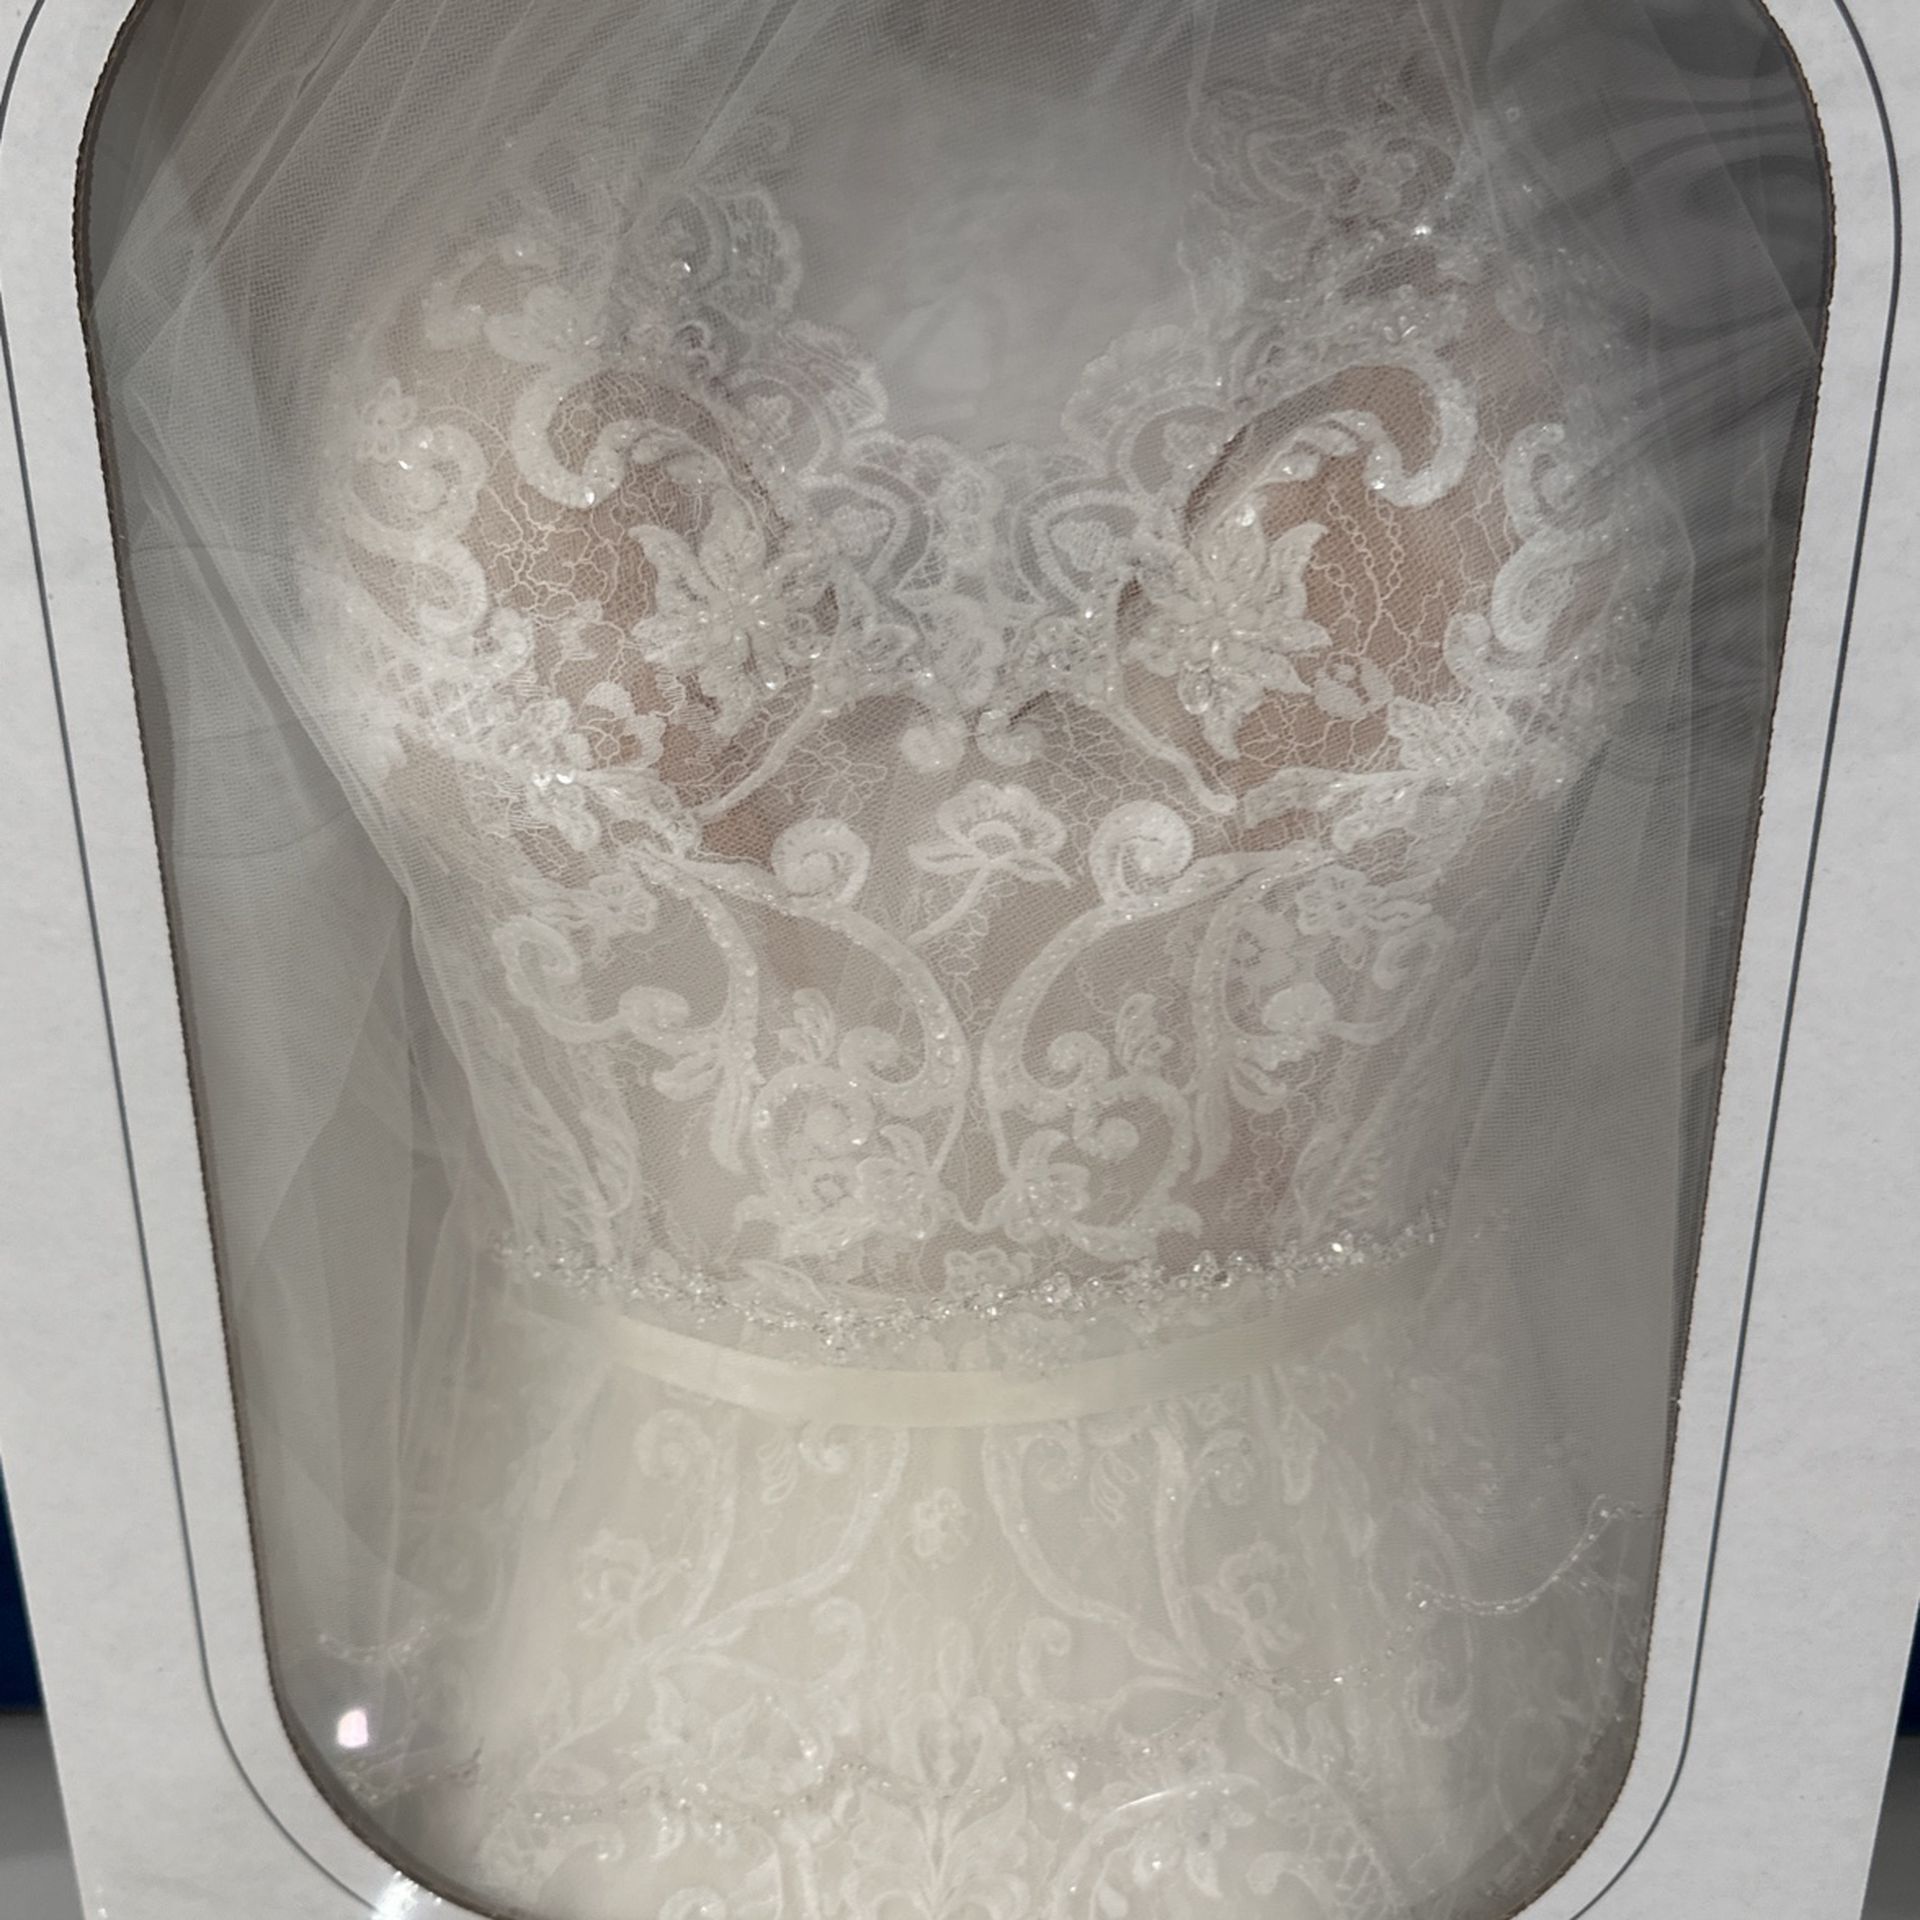 Bride Dress 